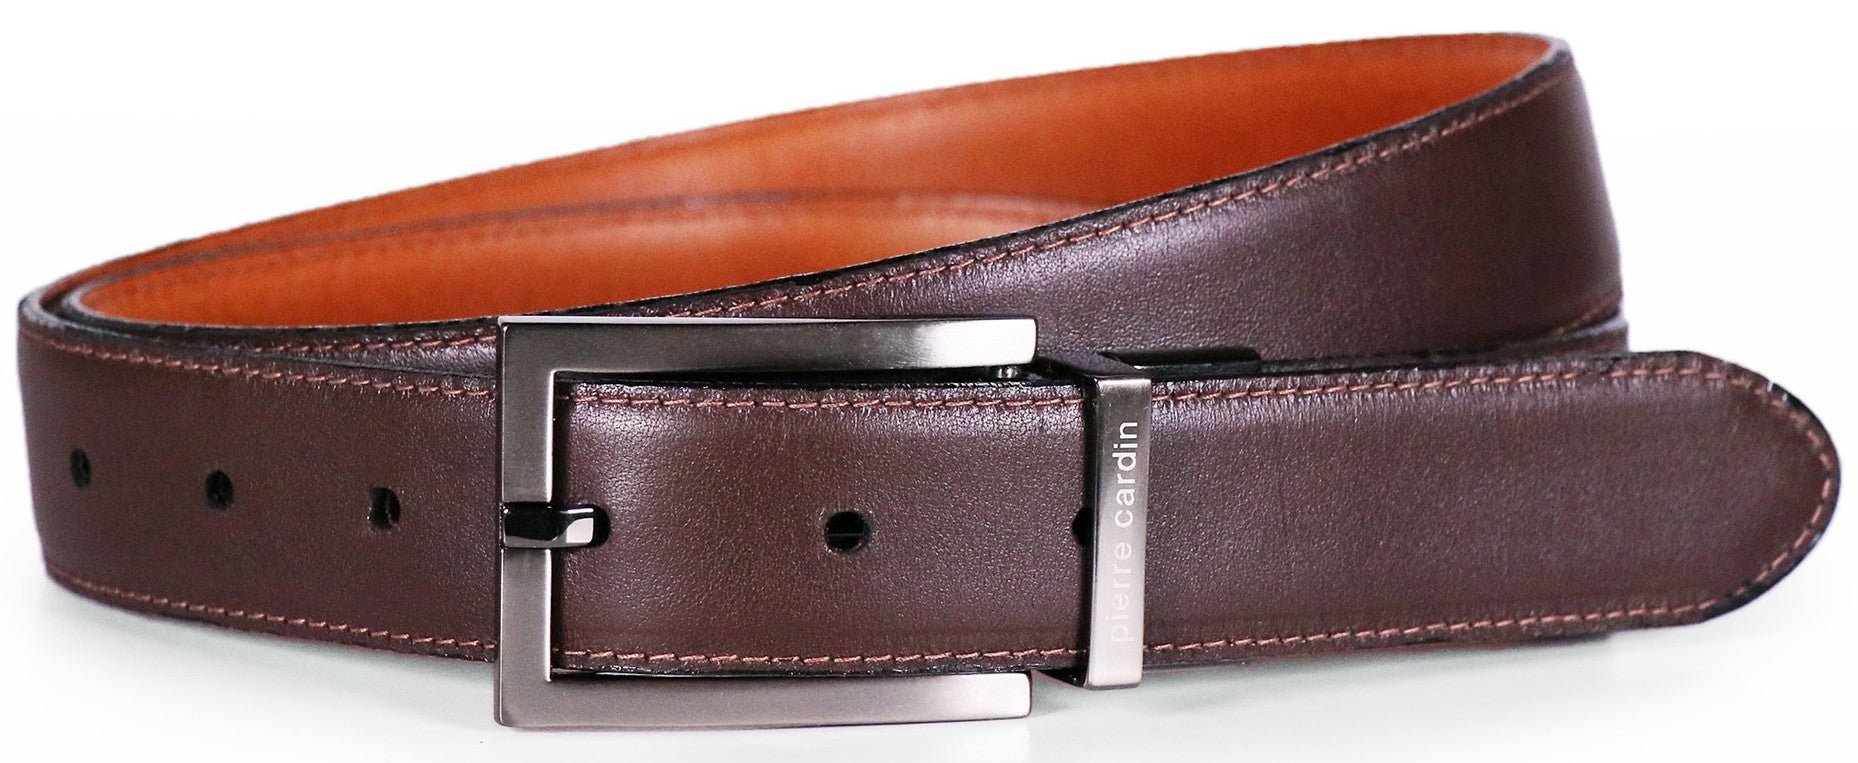 Pierre Cardin Reversible Belt - Thomson's Suits Ltd - BrownTan - 76 to 83 (S) - 50246